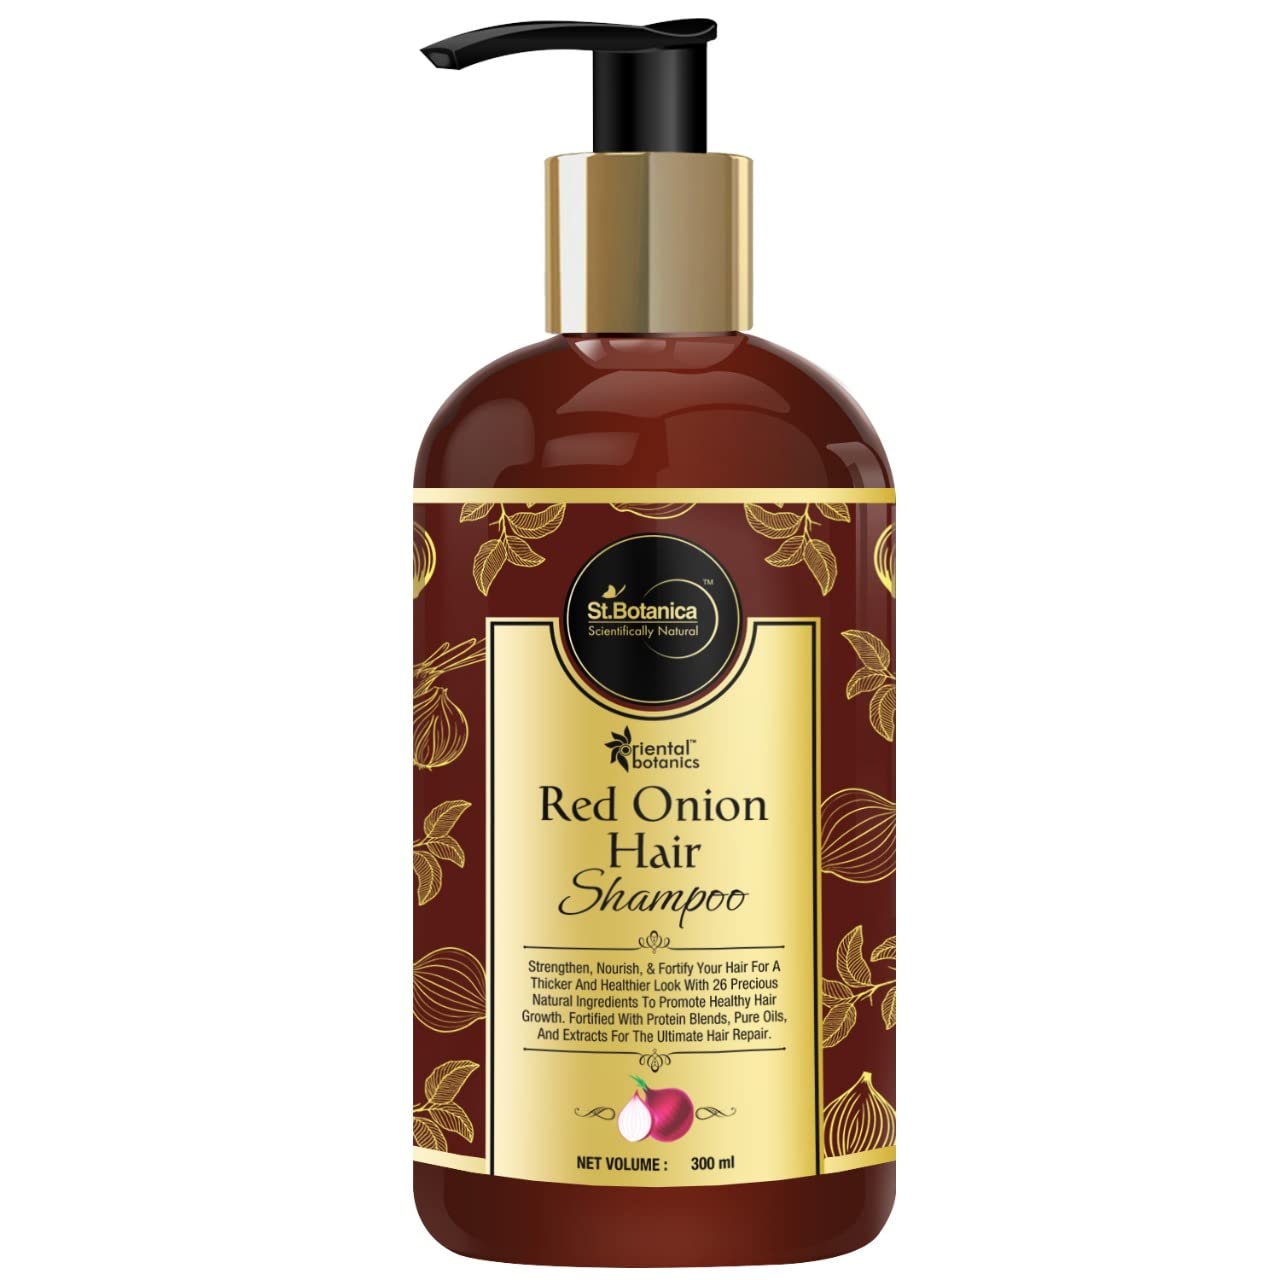 Oriental Botanics Red Onion Hair Shampoo, With Red Onion Oil, 27 Botanical Actives, Biotin, Argan Oil, Caffeine, Protein, Controls Hair Loss & Supports Healthy Hair Growth, 300 ml